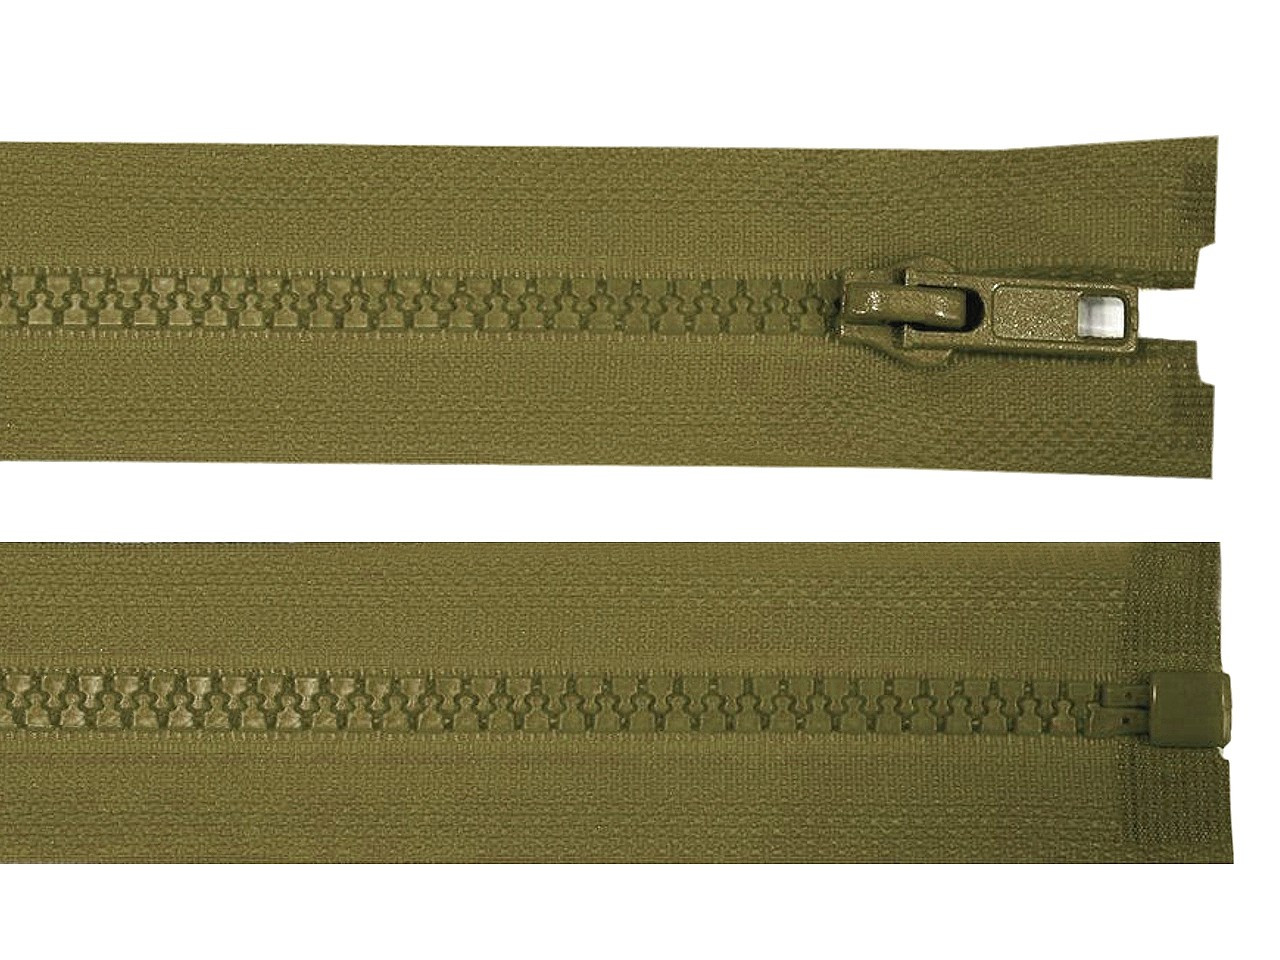 Kostěný zip No 5 délka 70 cm bundový, barva 298 zelená khaki tmavá